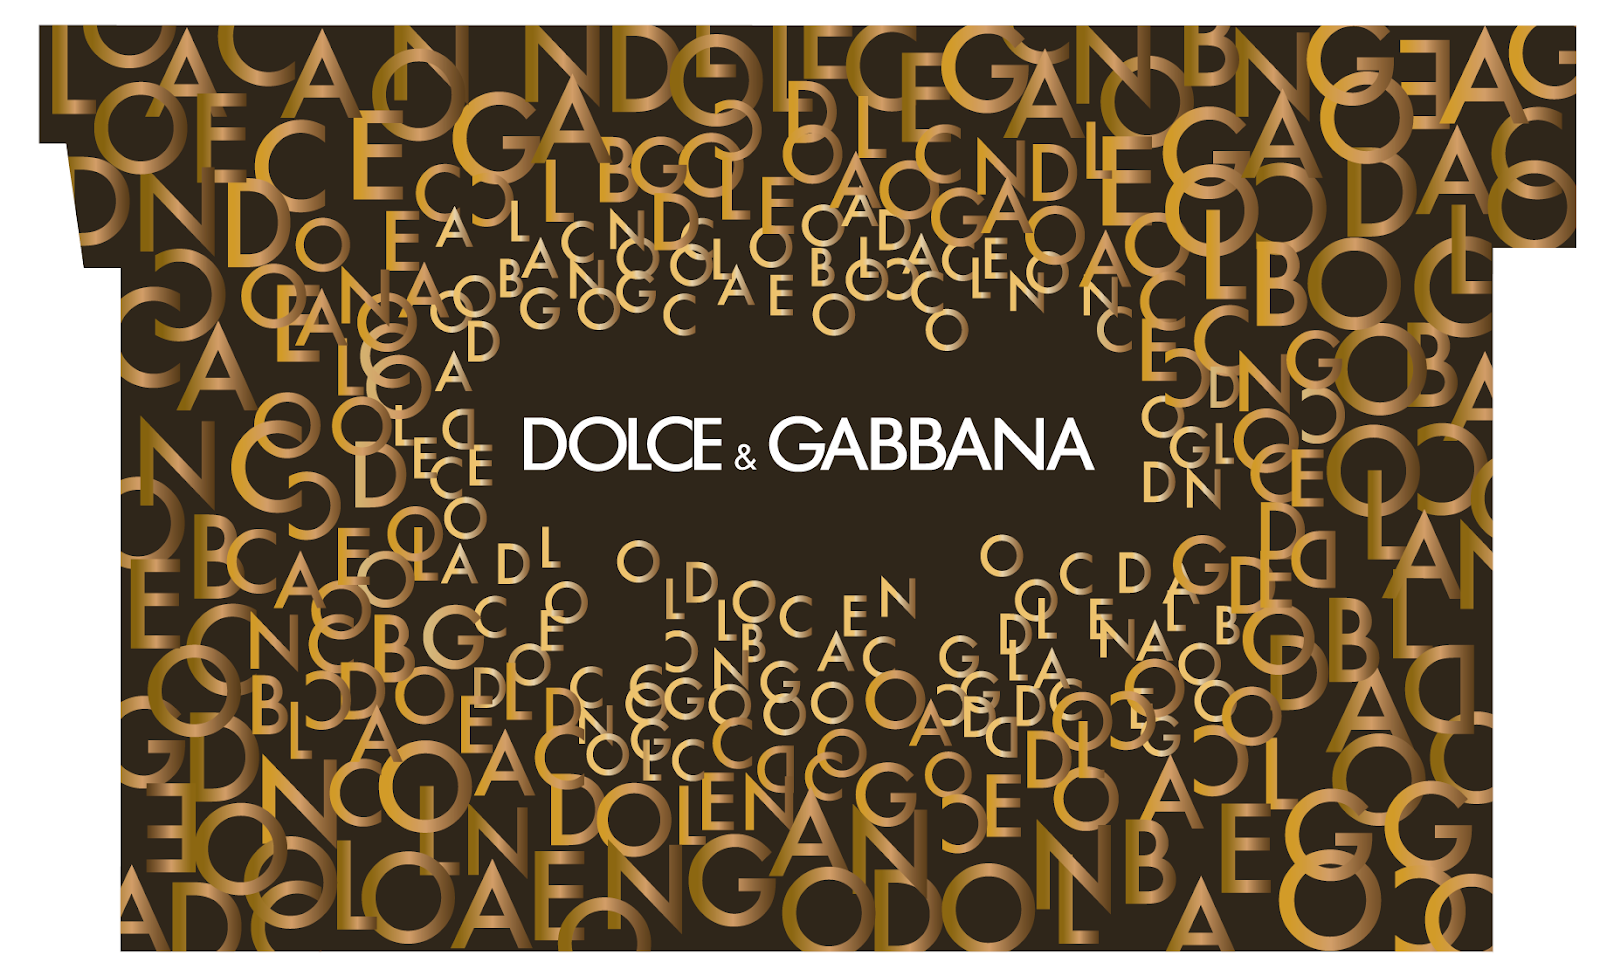 Dolce & Gabbana Facade Design Contest | Parsons Paris